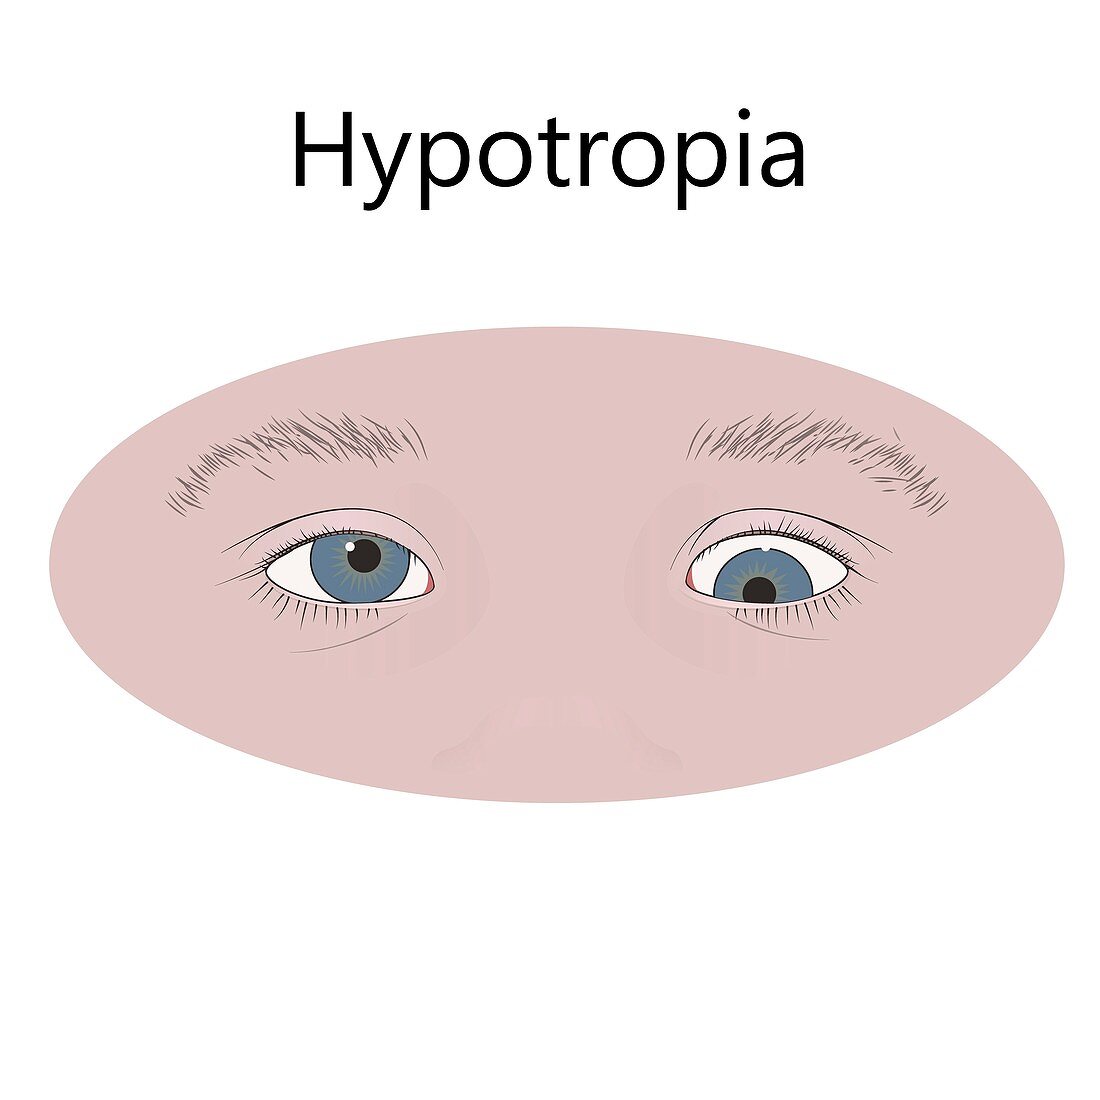 Childhood hypotropia, illustration